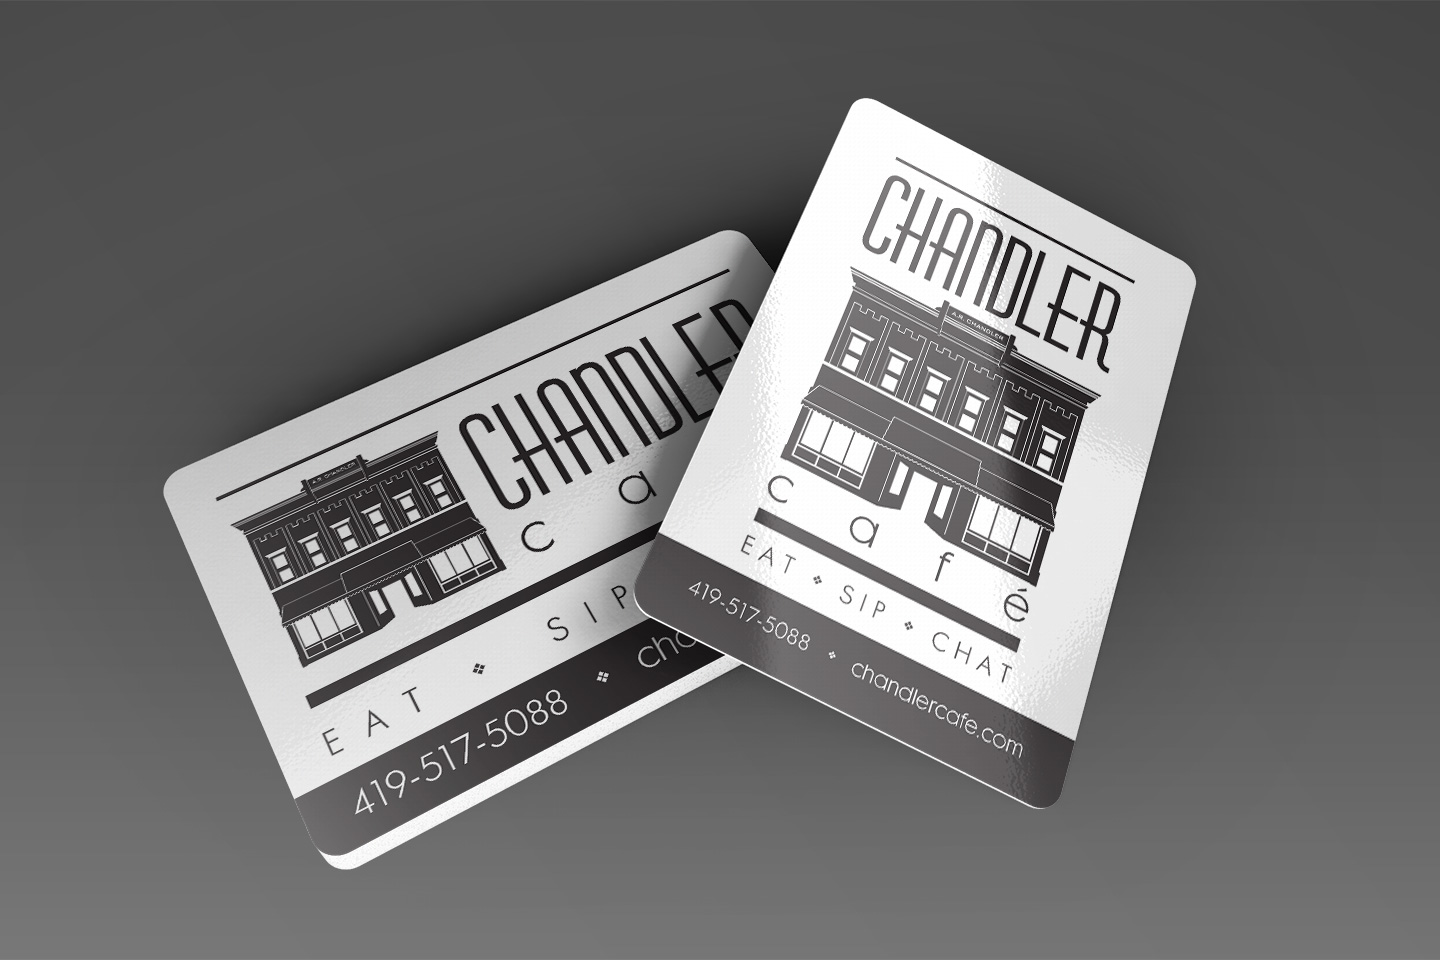 Chandler Café gift cards